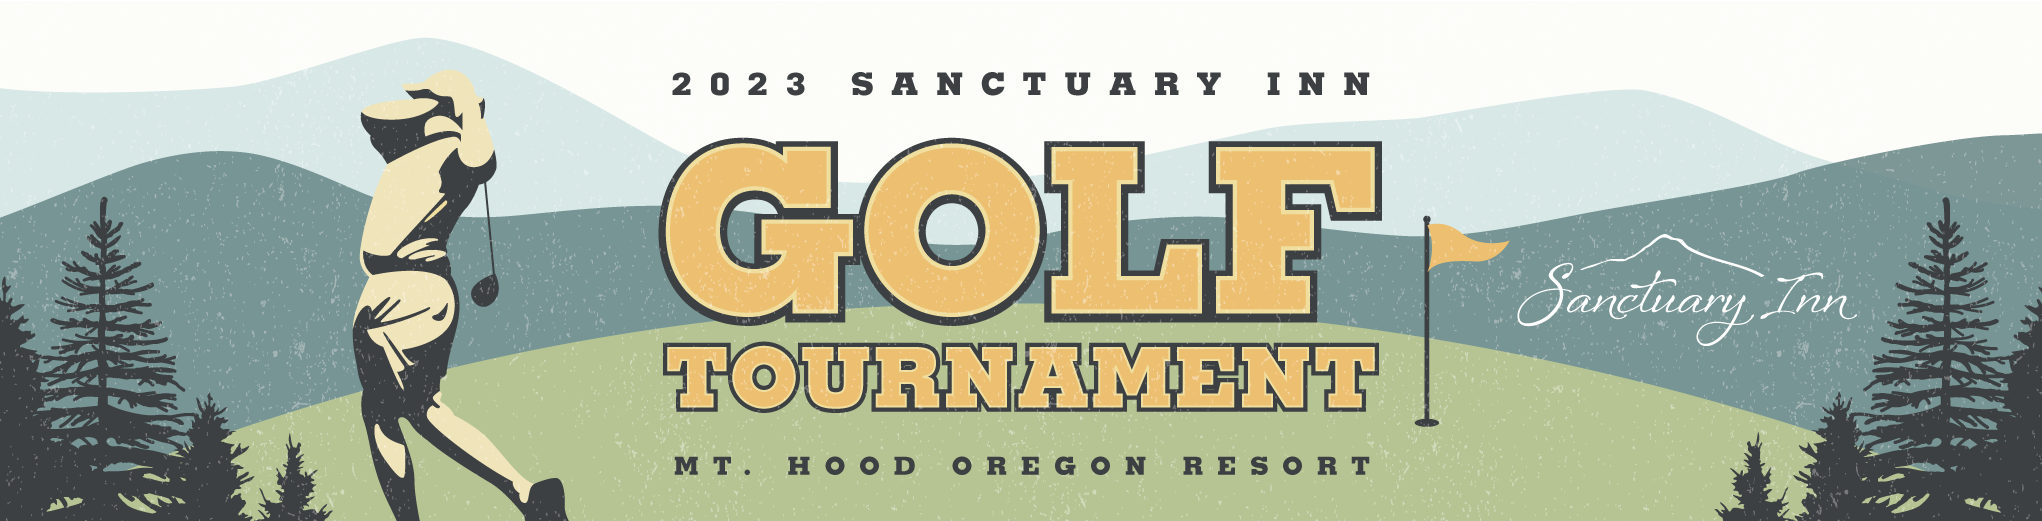 2023 Sanctuary Inn Golf Tournament